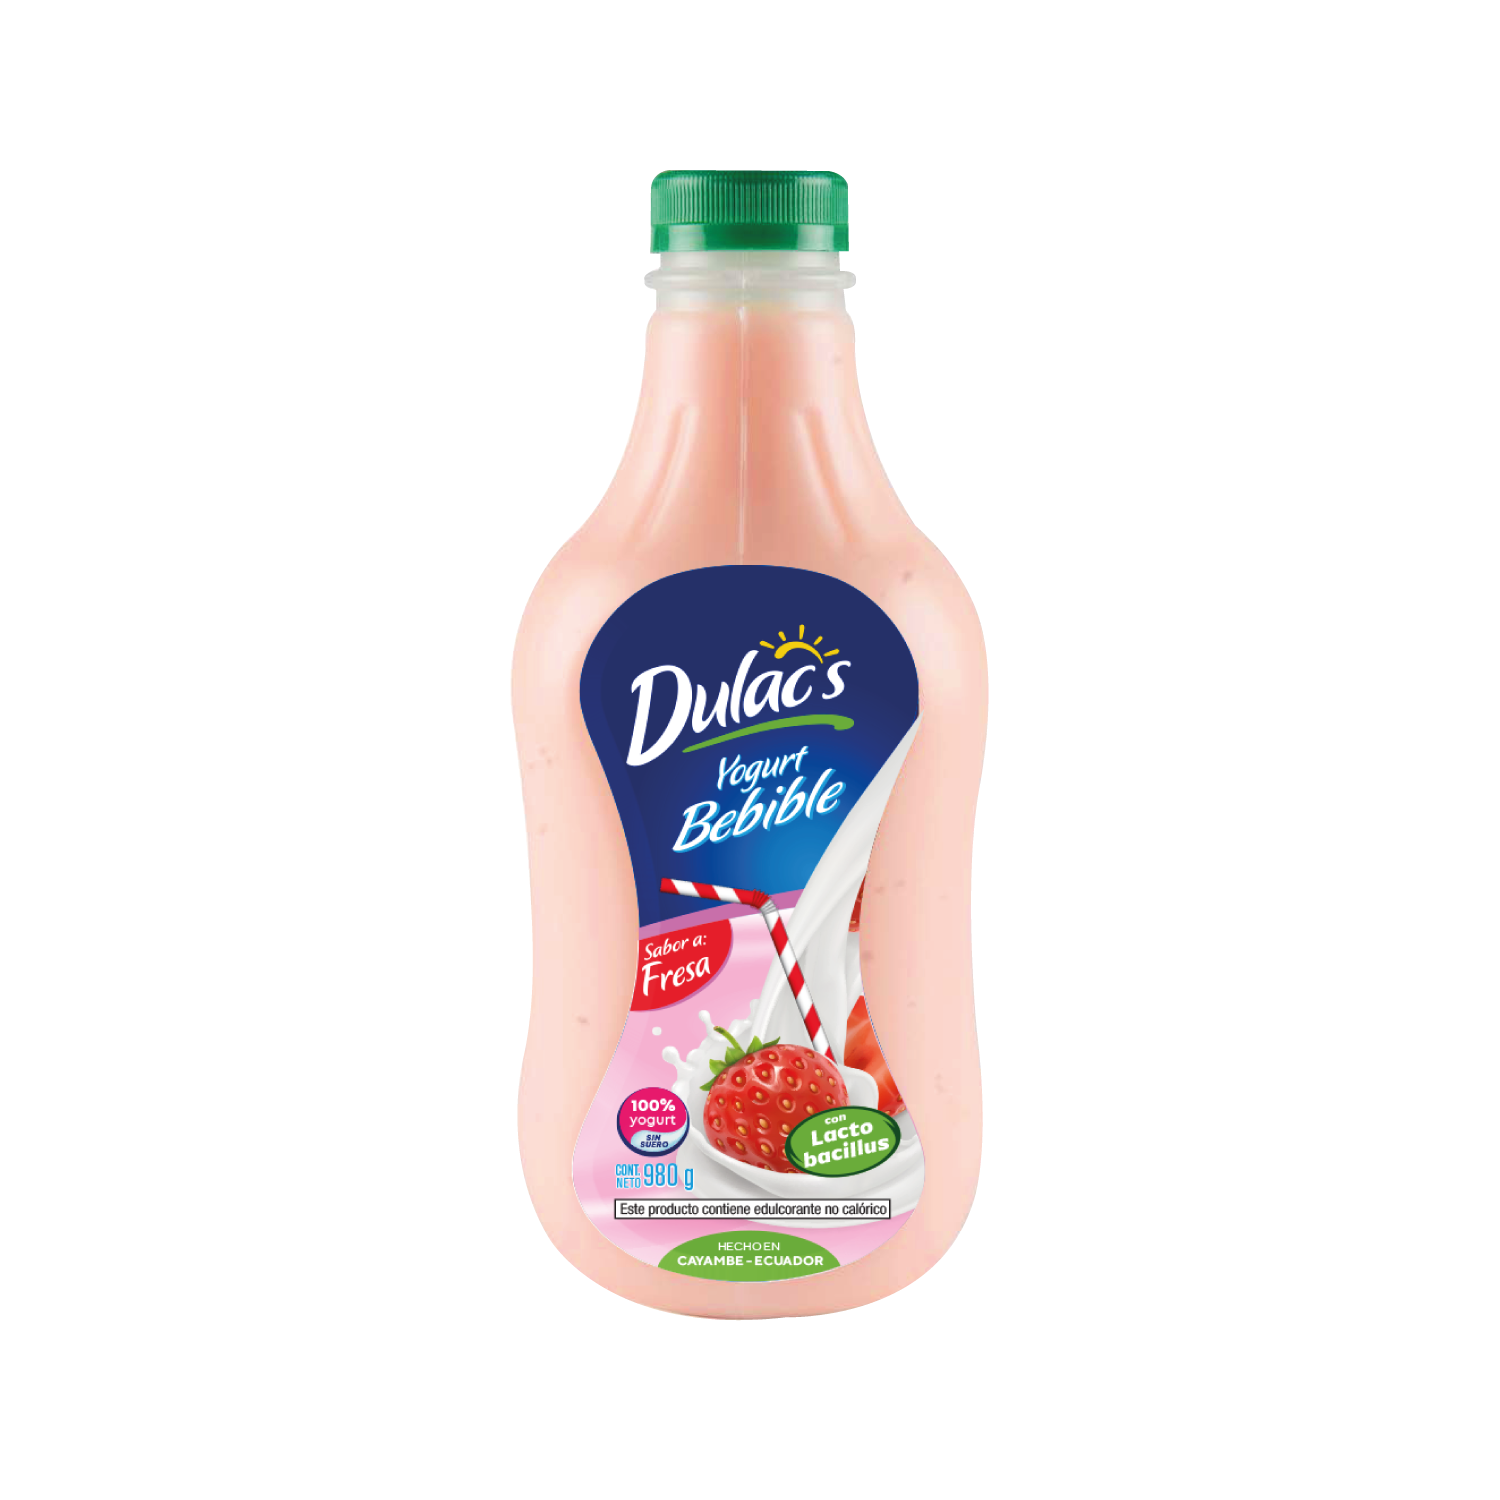 Dulacs Yogurt Bebible 980G